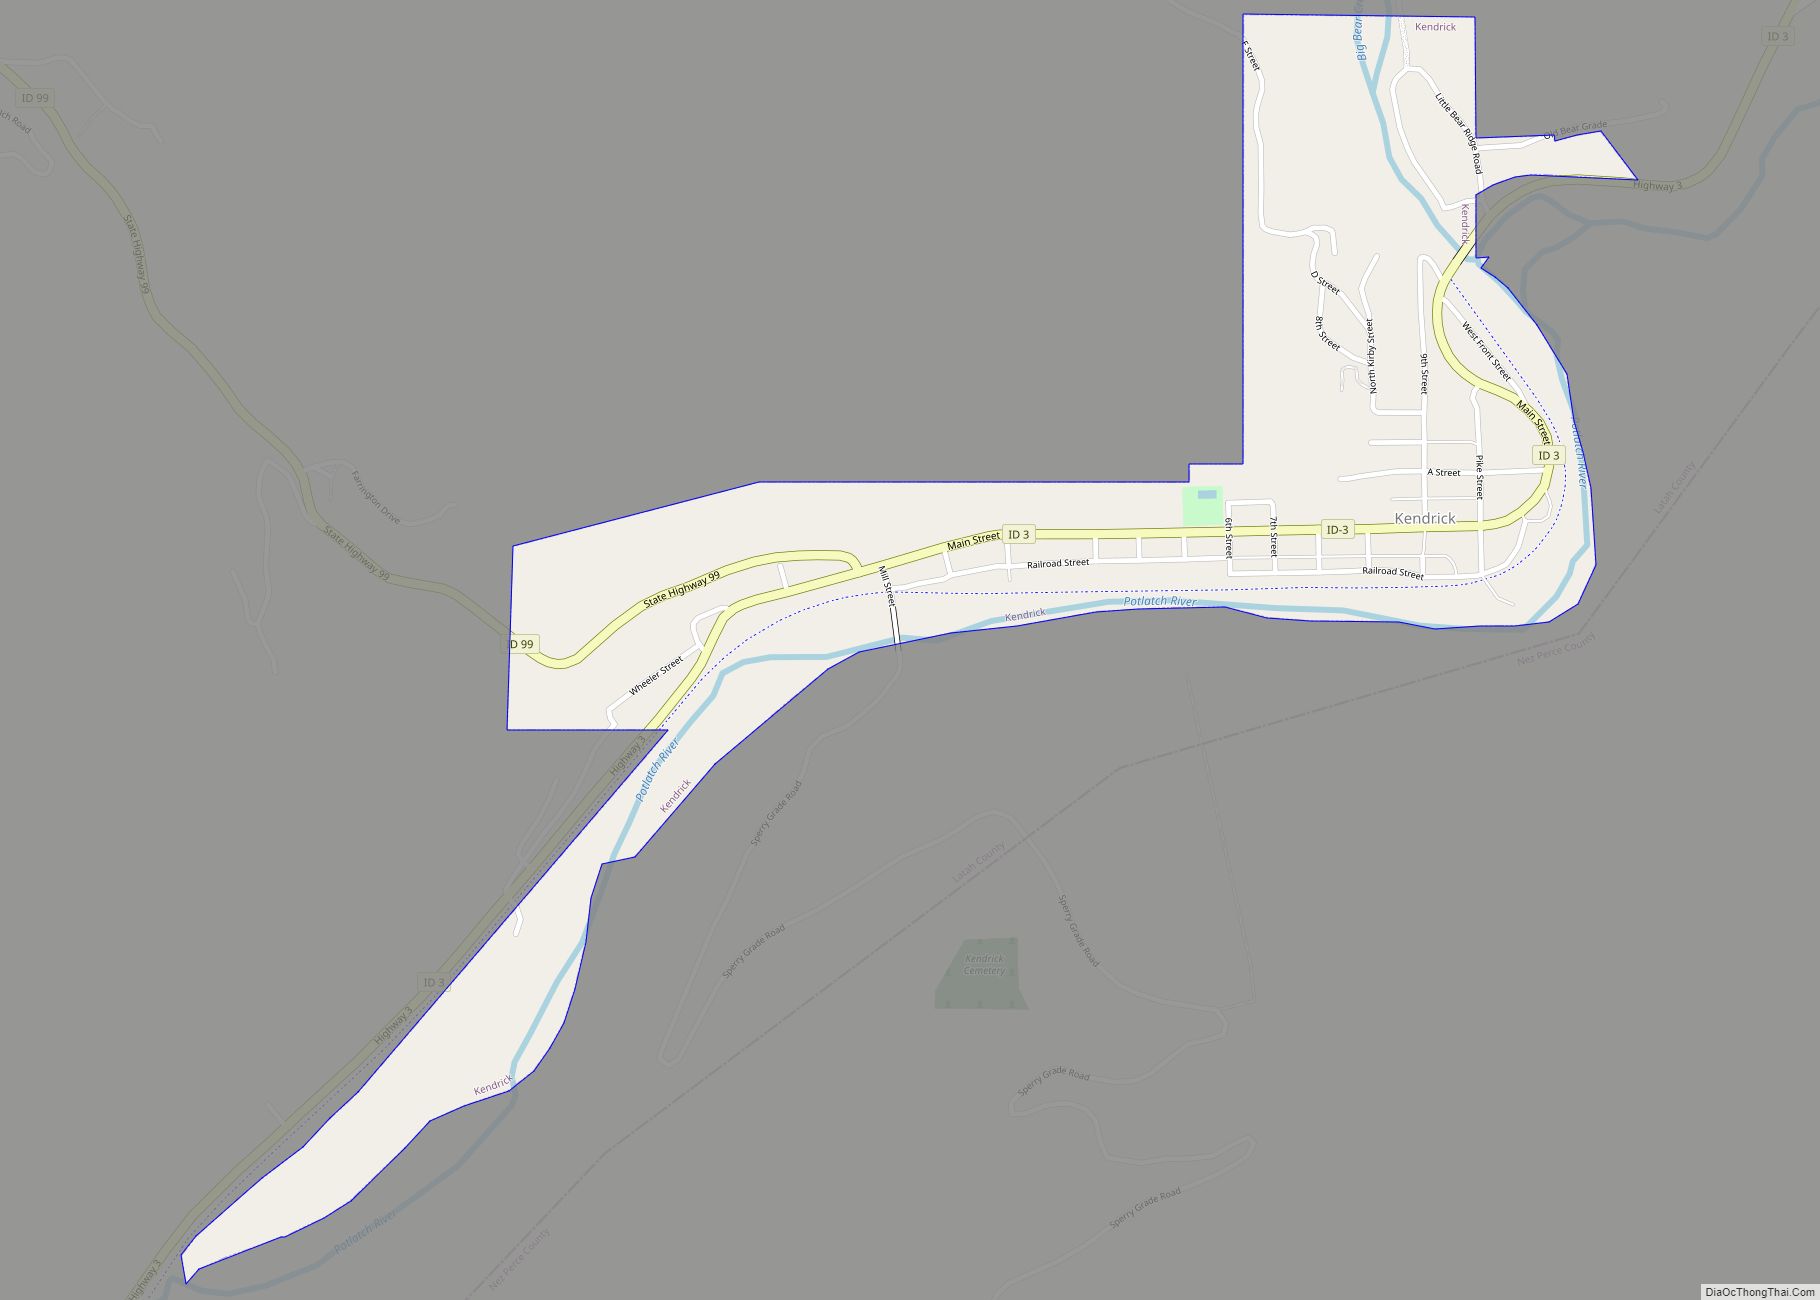 Map of Kendrick city